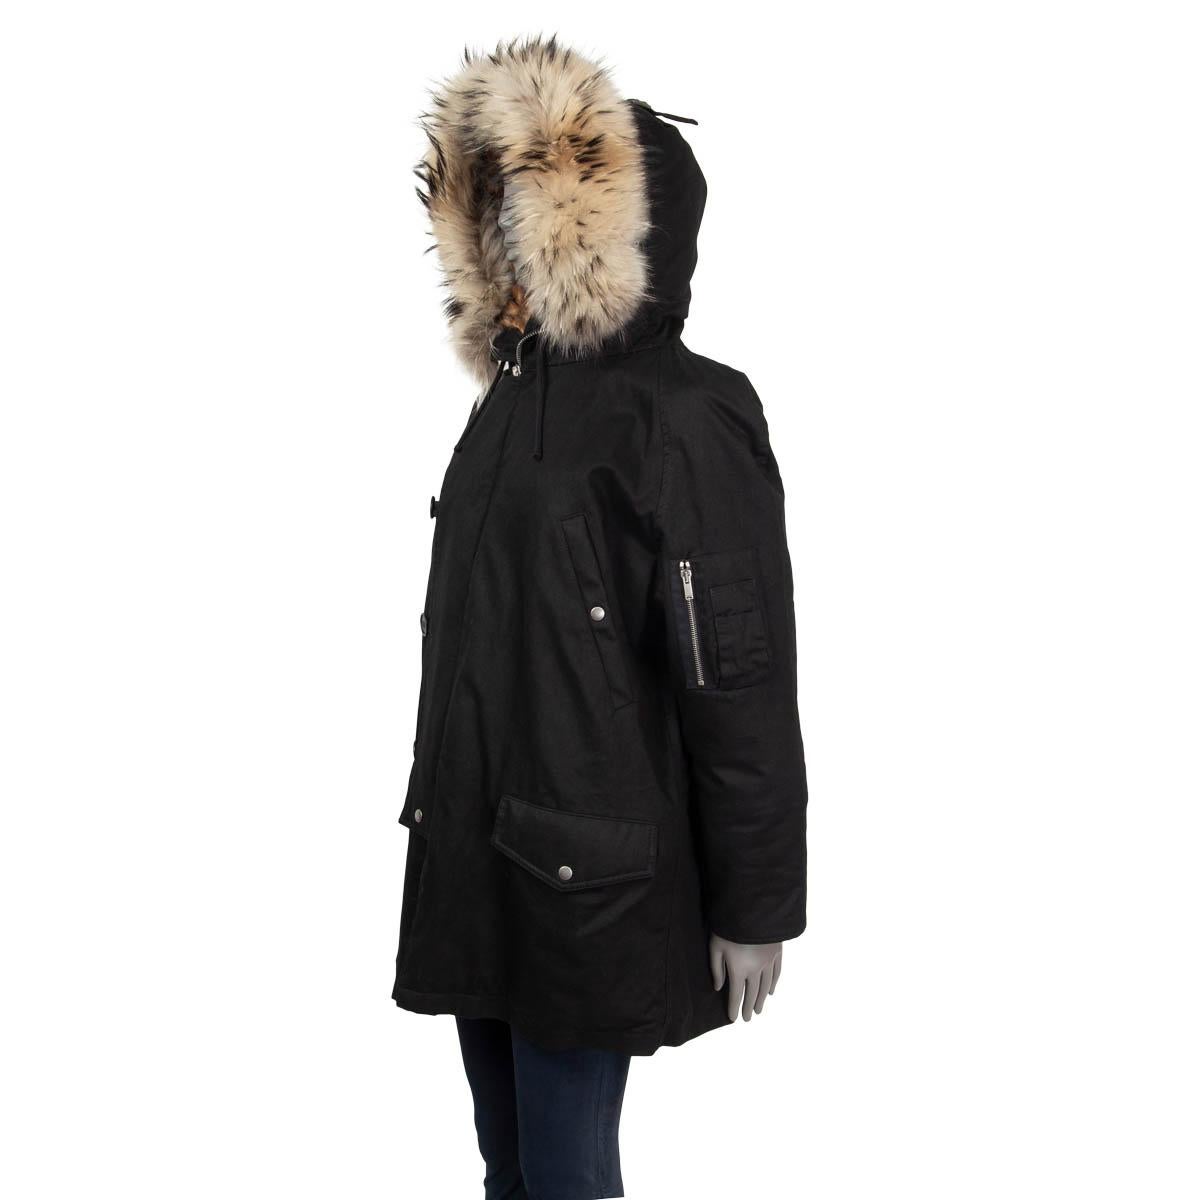 Black SAINT LAURENT black cotton FUR LINED HOODED Parka Coat Jacket 36 XS For Sale